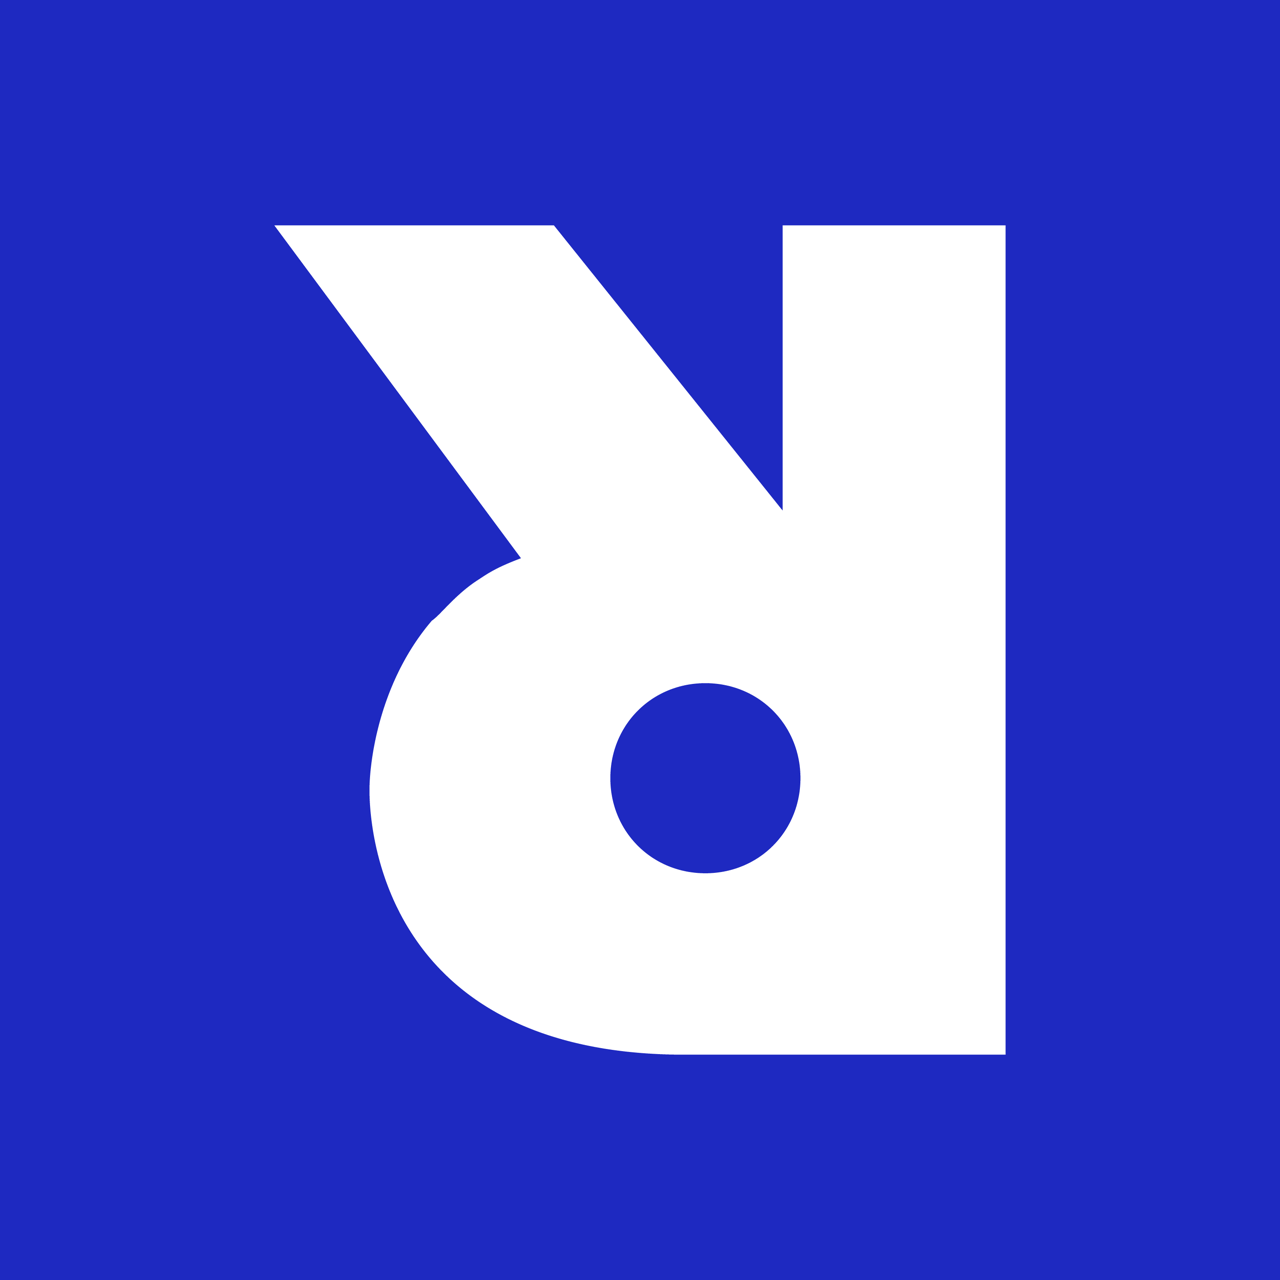 Cool Unknown Logo - Artrabbit: Unknown; Firm: Bond, UK; Year: 2016. Logo A